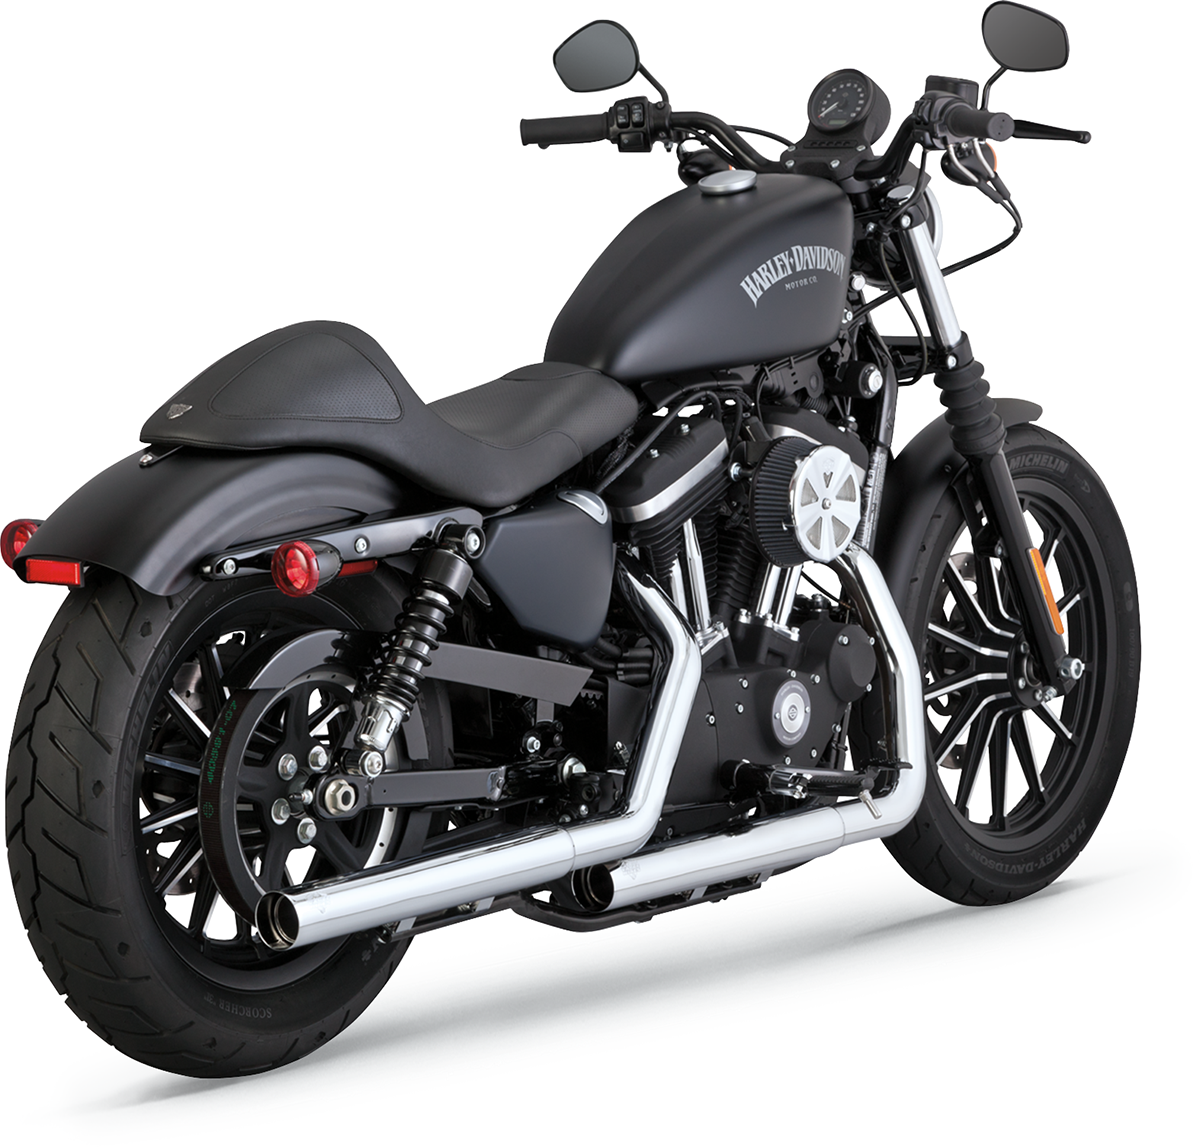 Vance & Hines Straightshots Slip On Mufflers for 2014-2021 Harley Sportster XL